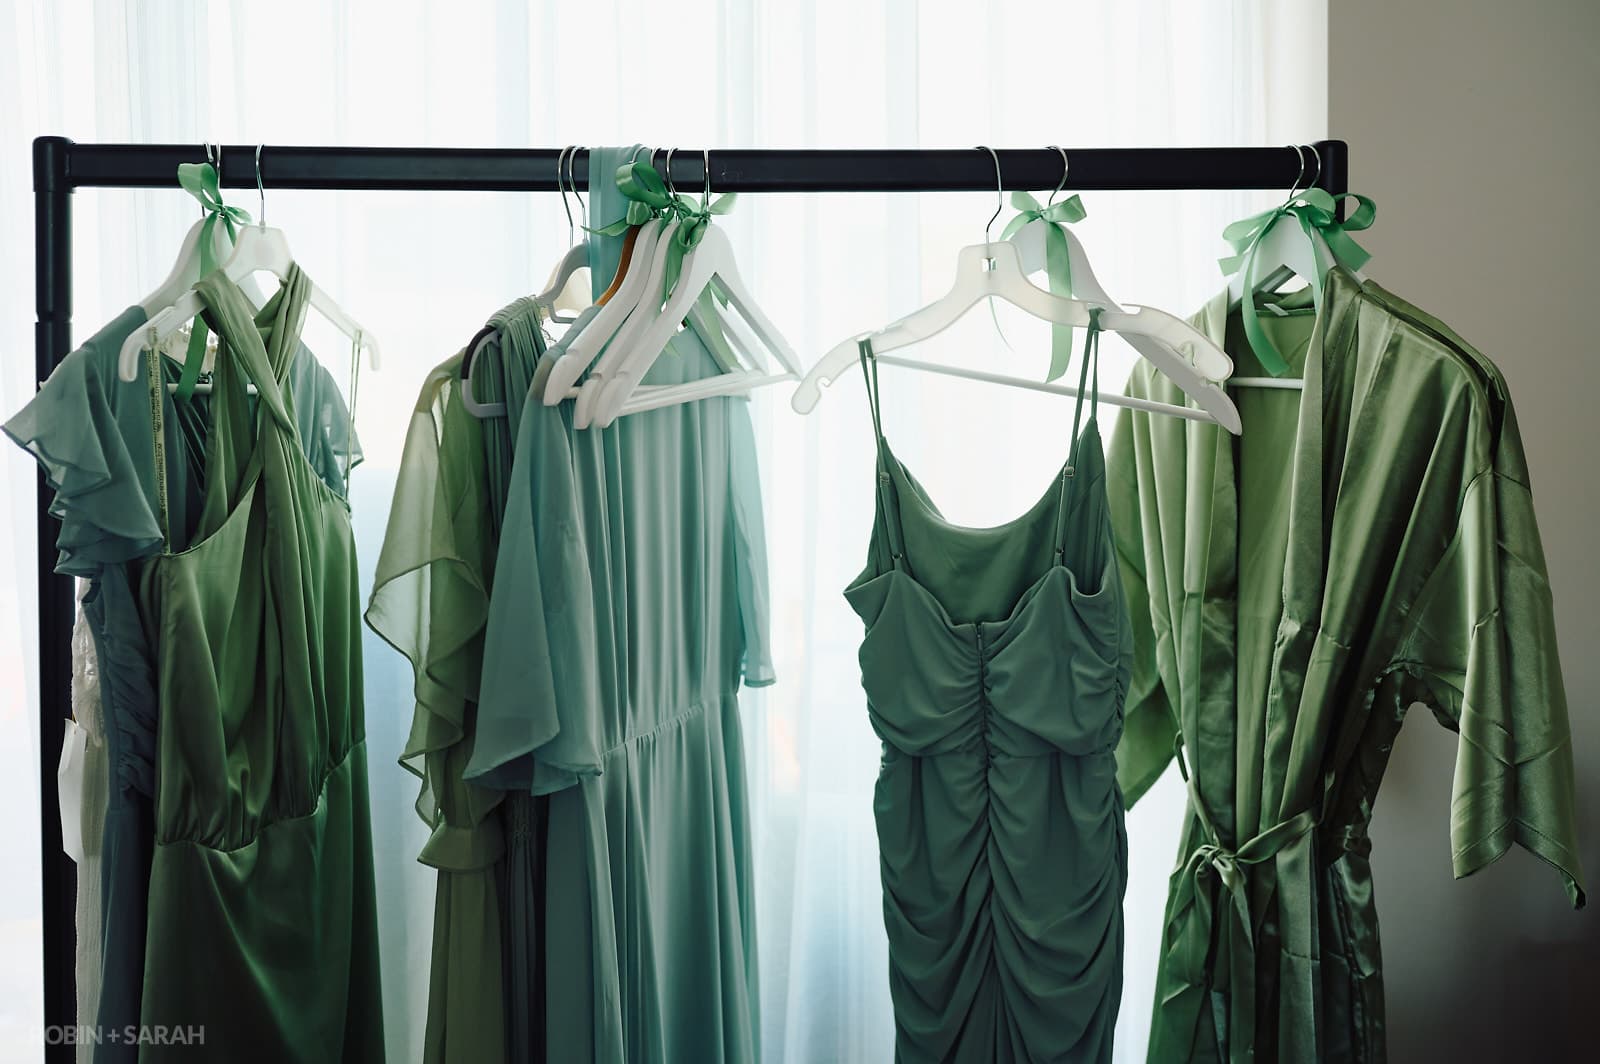 Green bridesmaids dresses on hangers